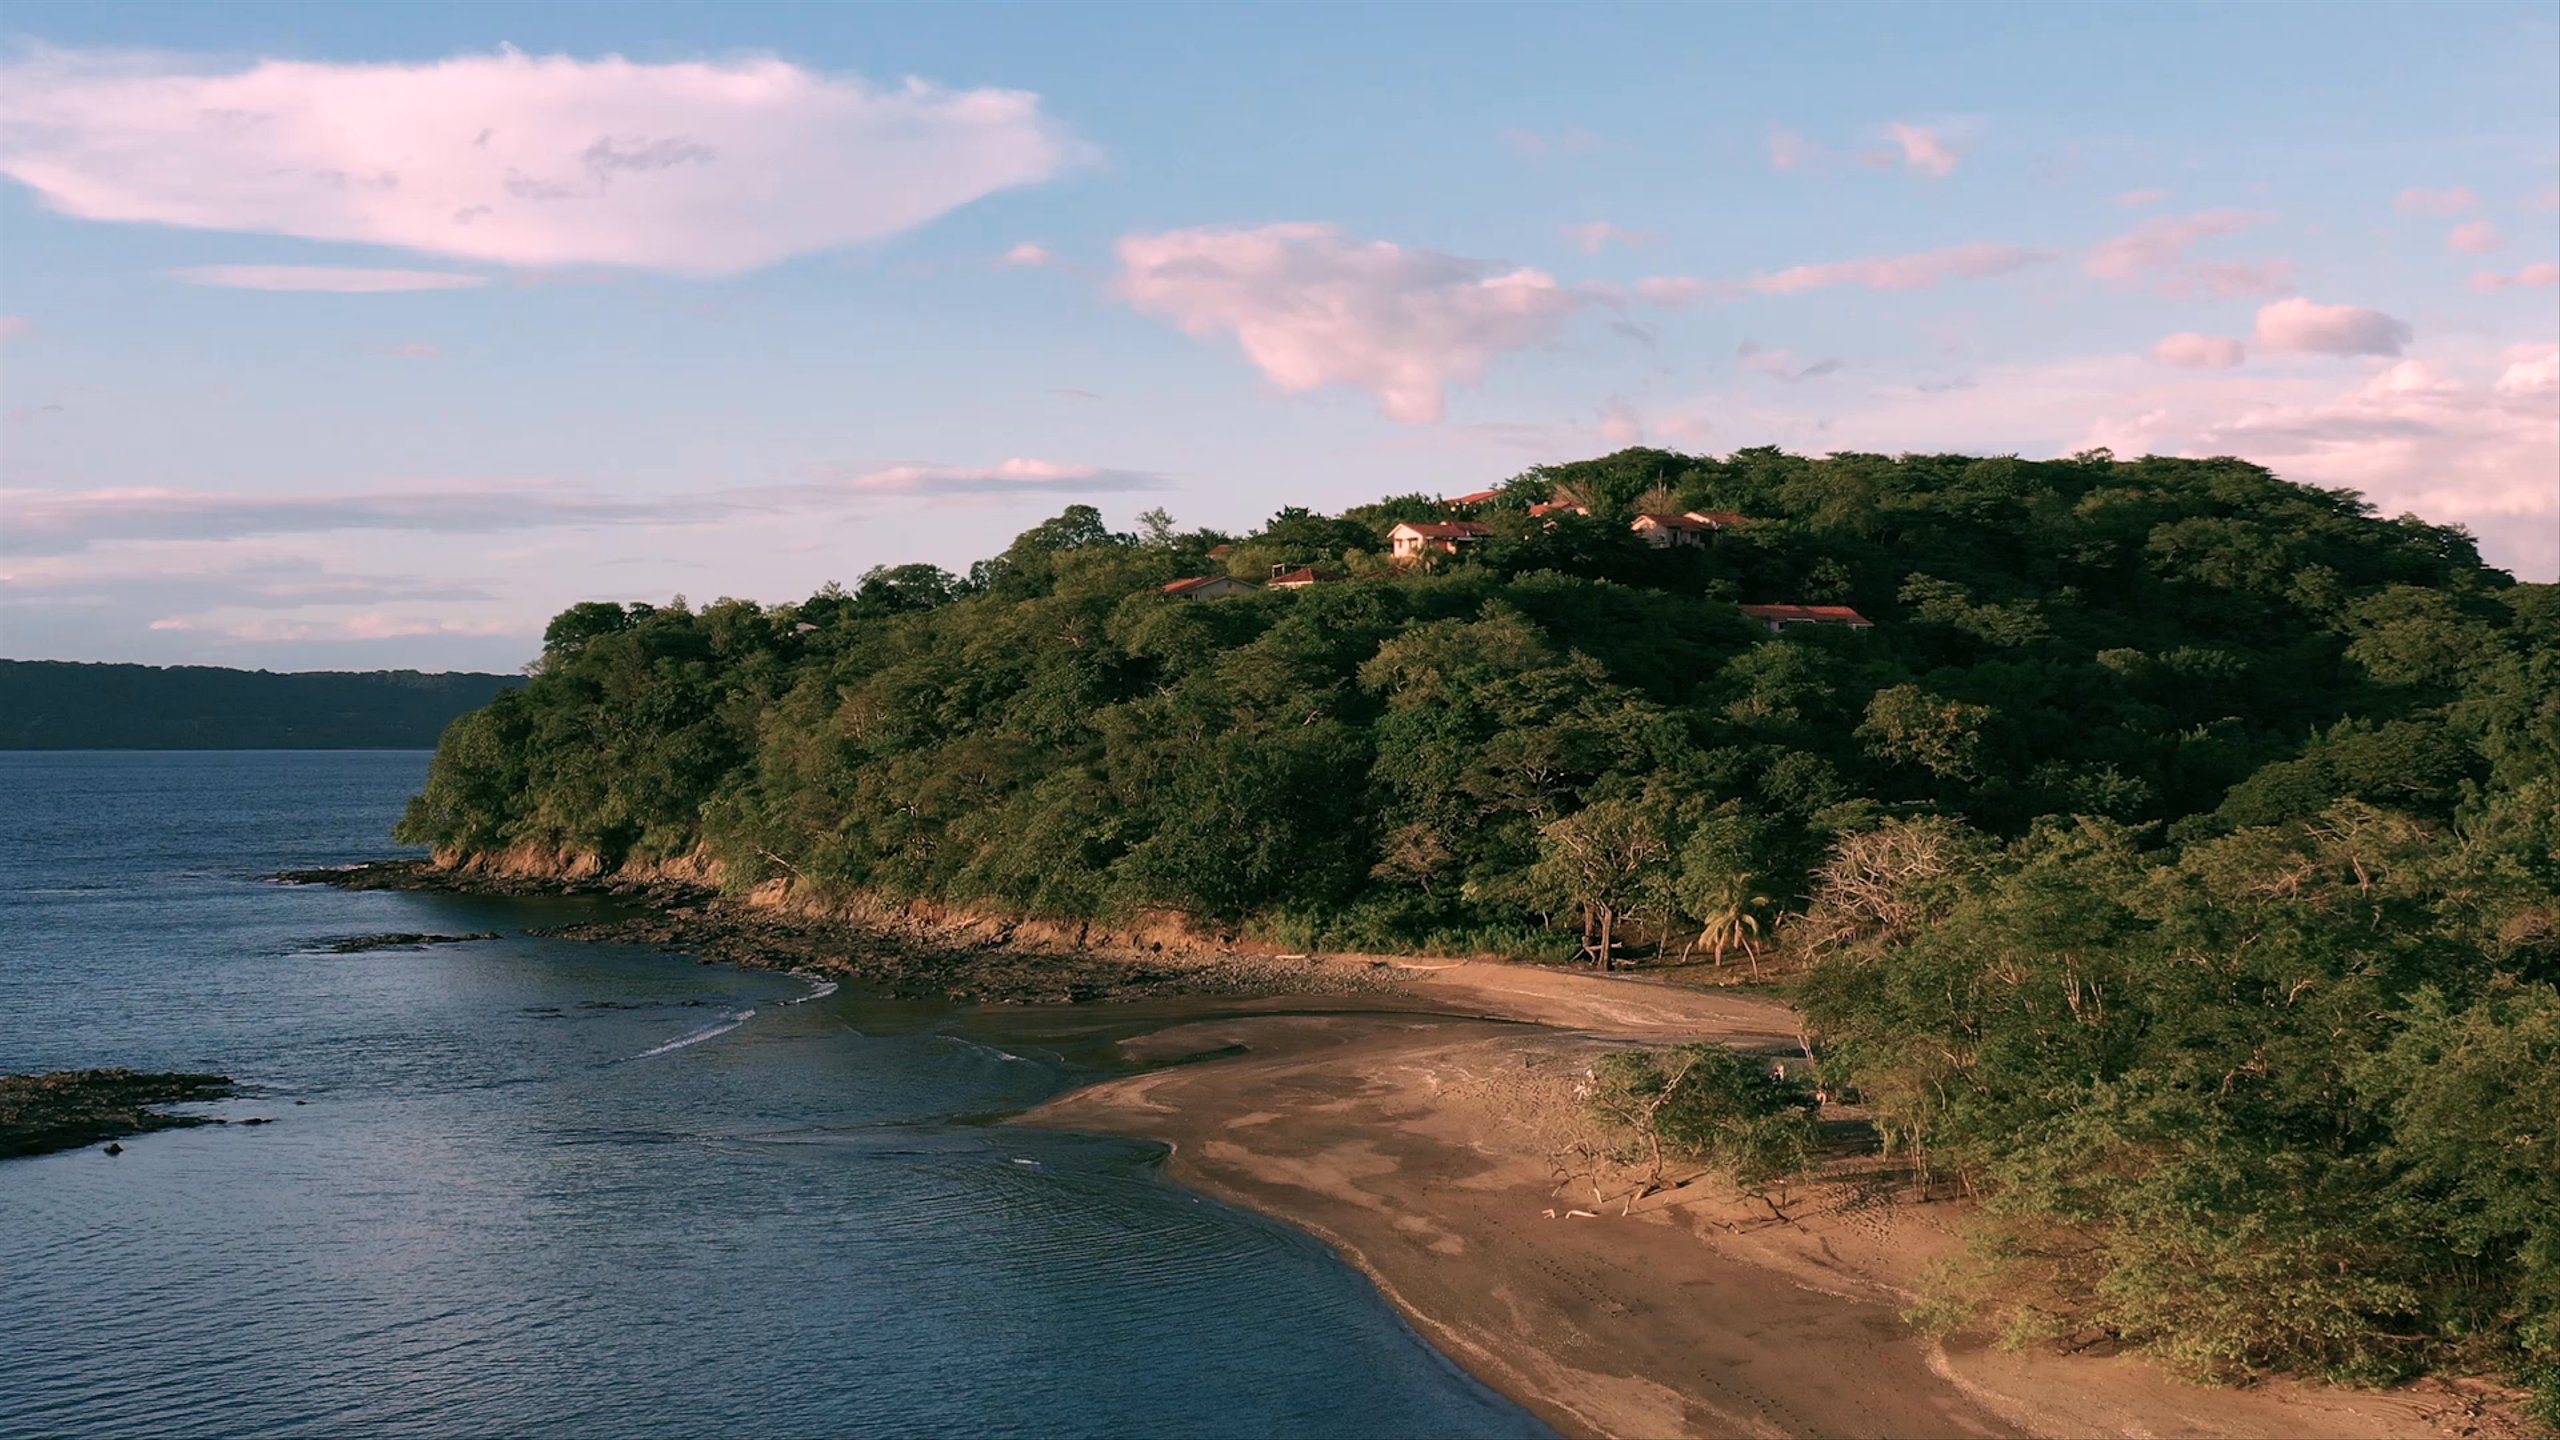 Video of motorcyclist riding on beach along Costa Rica coastline